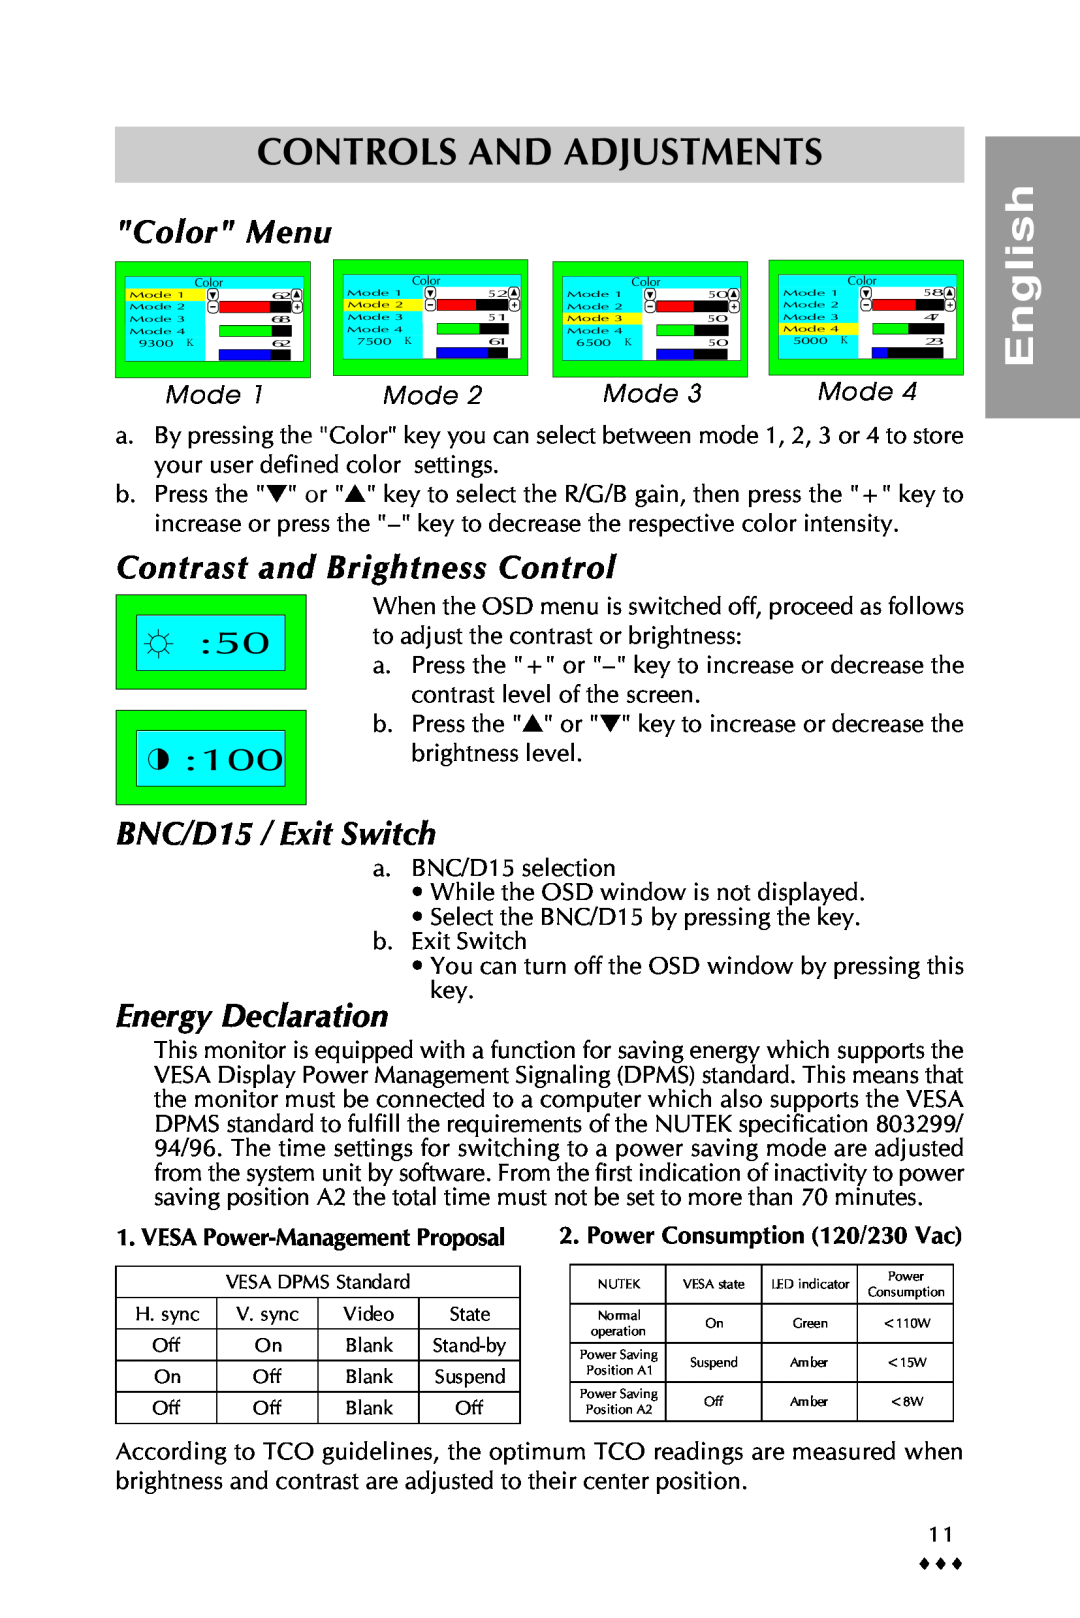 Sony pr710te Color Menu, Contrast and Brightness Control, BNC/D15 / Exit Switch, Energy Declaration, English, Mode 